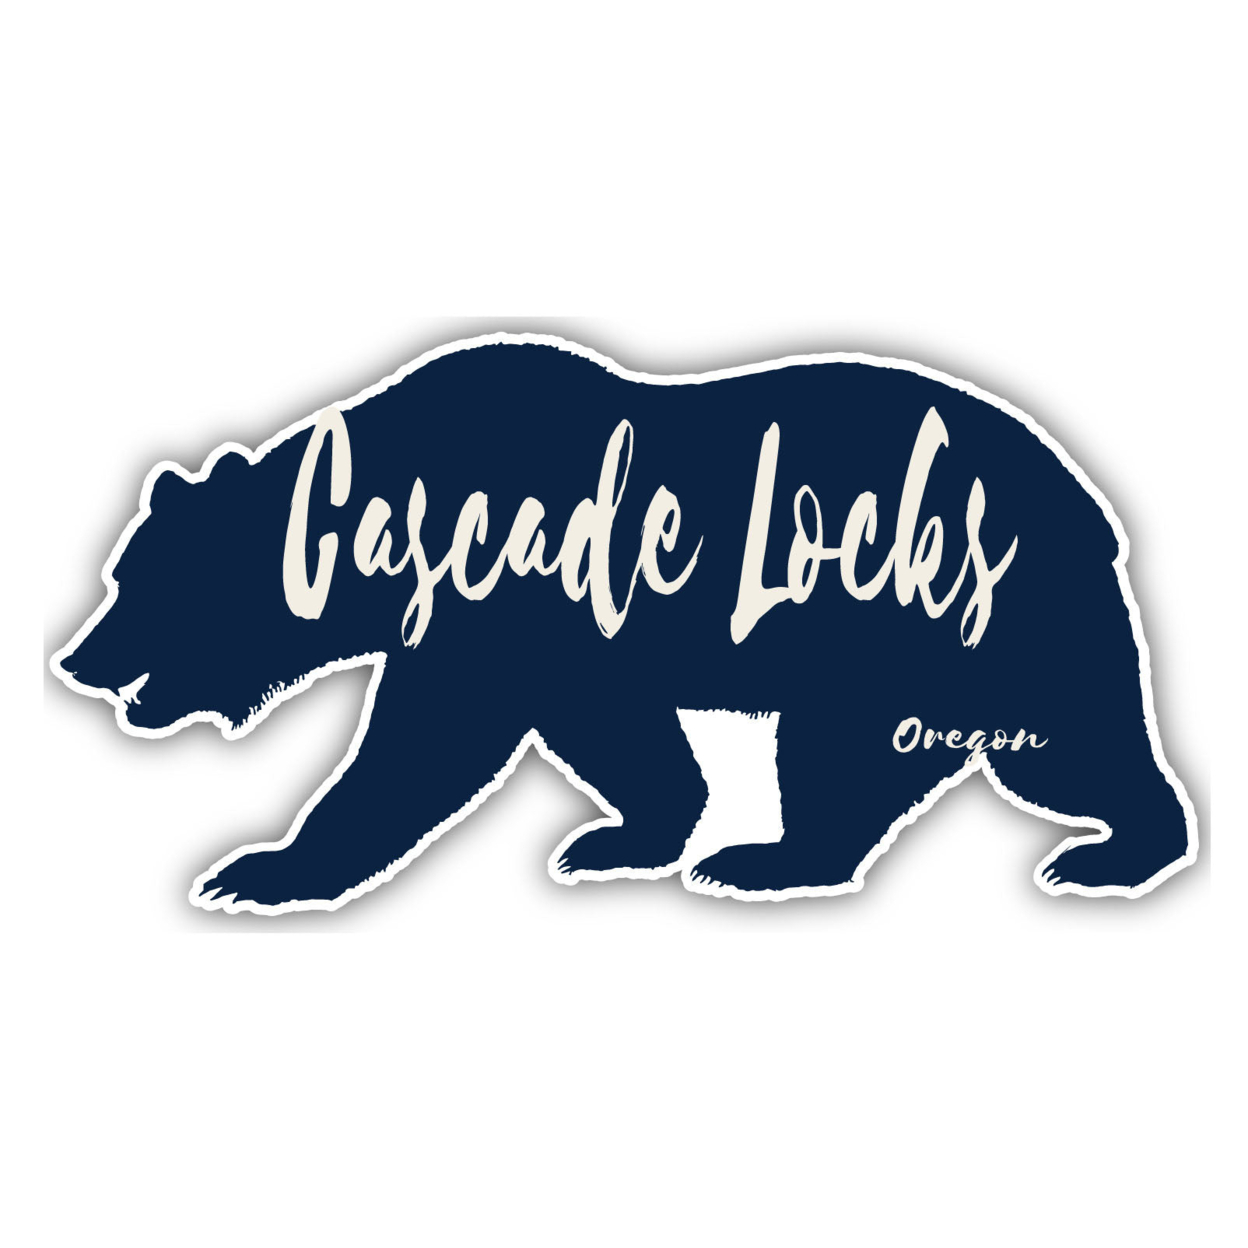 Cascade Locks Oregon Souvenir Decorative Stickers (Choose Theme And Size) - 4-Pack, 6-Inch, Adventures Awaits